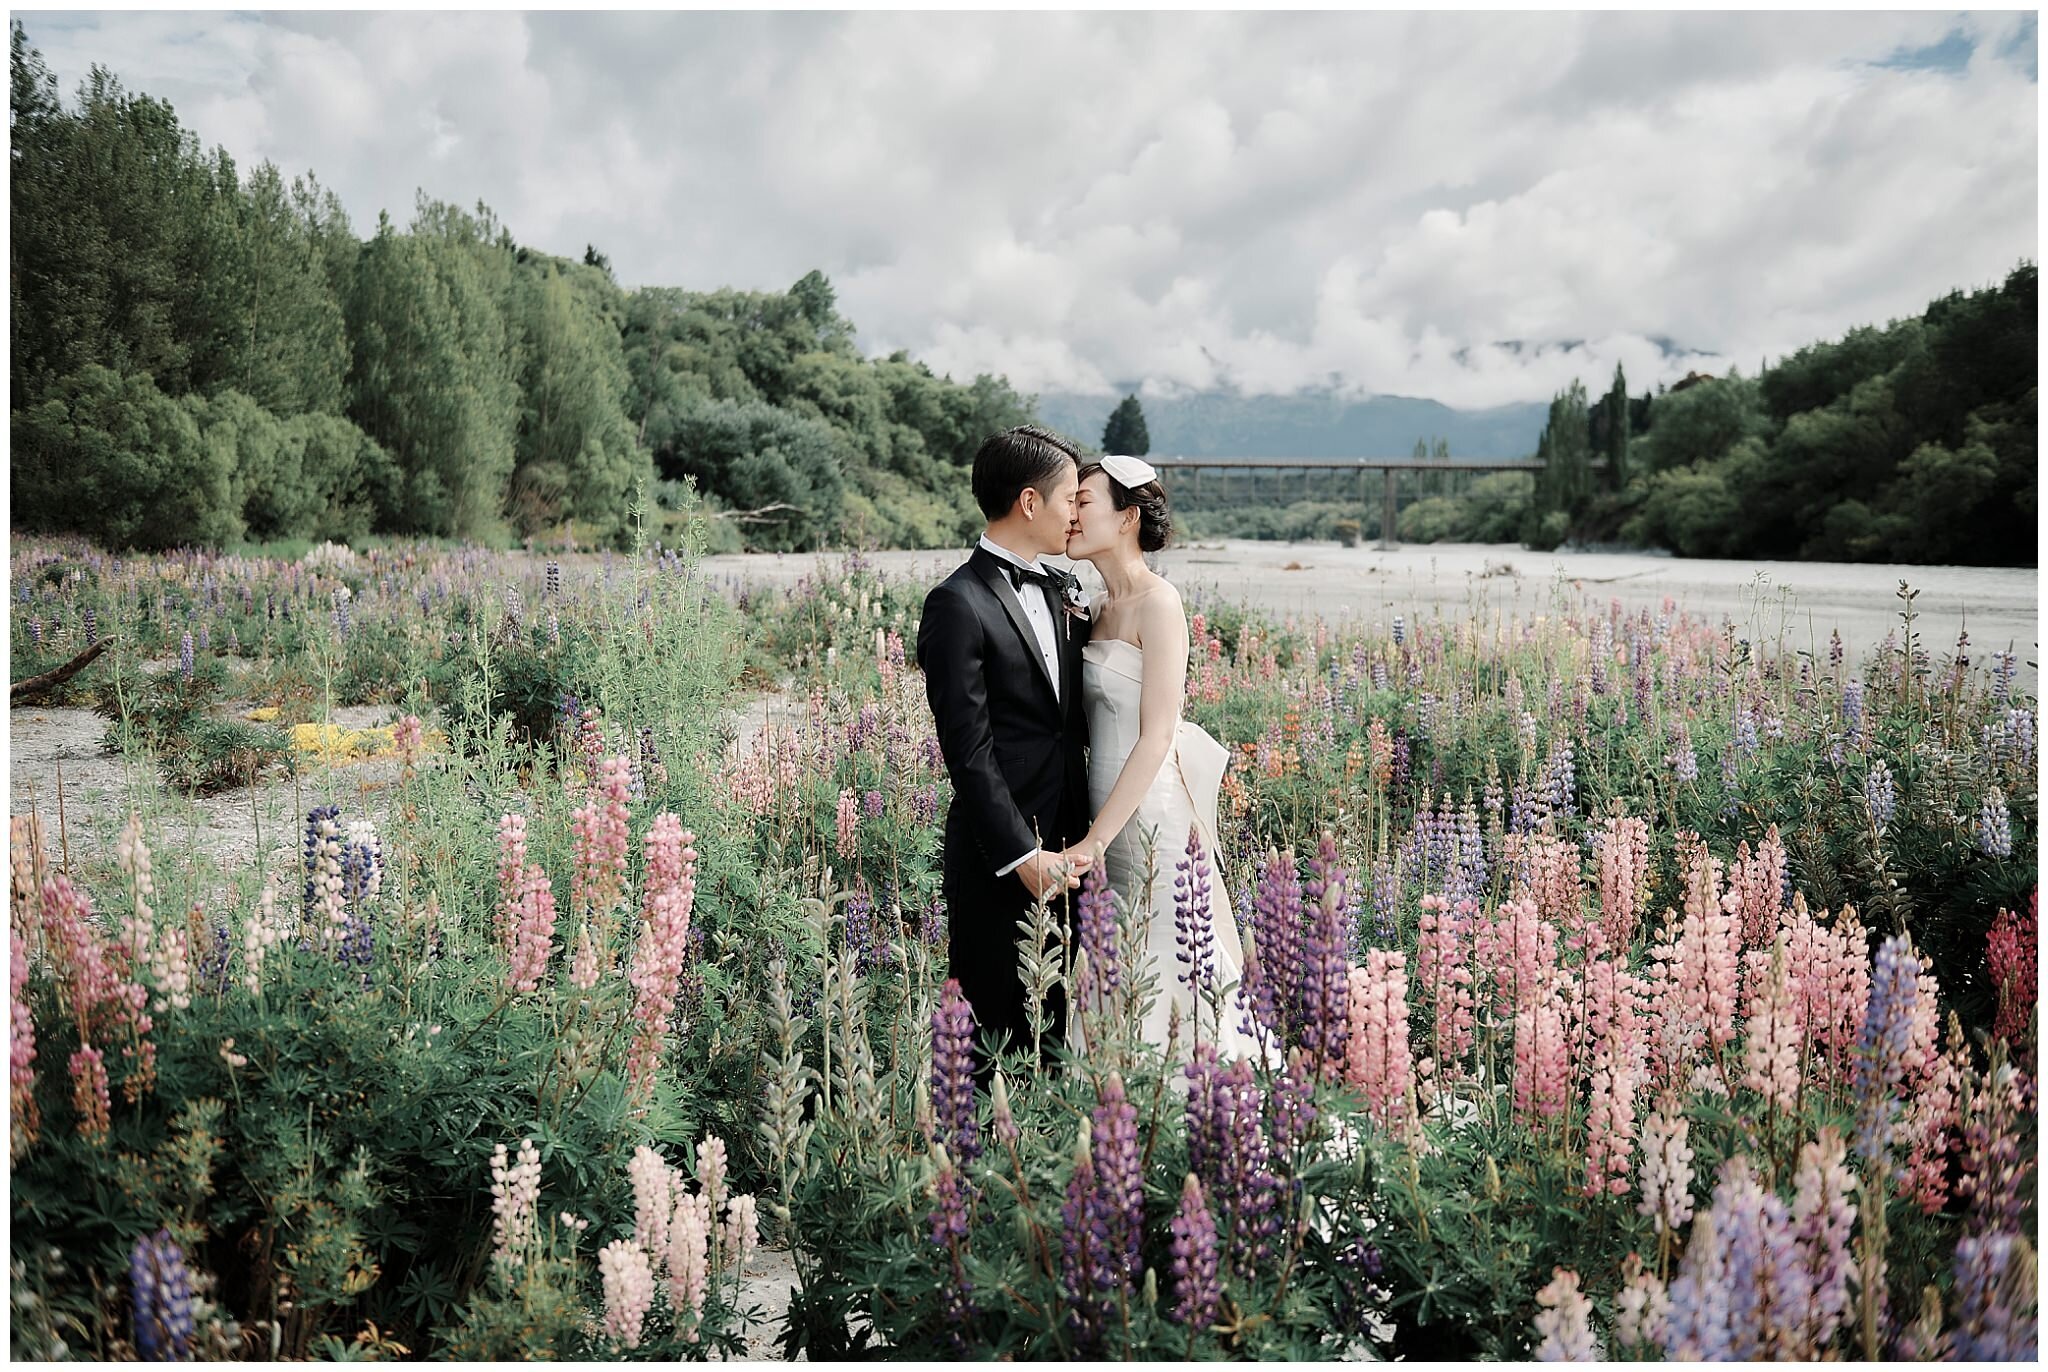 Queenstown and Lake Tekapo, New Zealand Pre-Wedding Shoot クイーンズタウンとテカポ、ニュージーランドで撮る素敵な前撮りフォトウェディング ヘリウェディング　ウェディング (Copy)